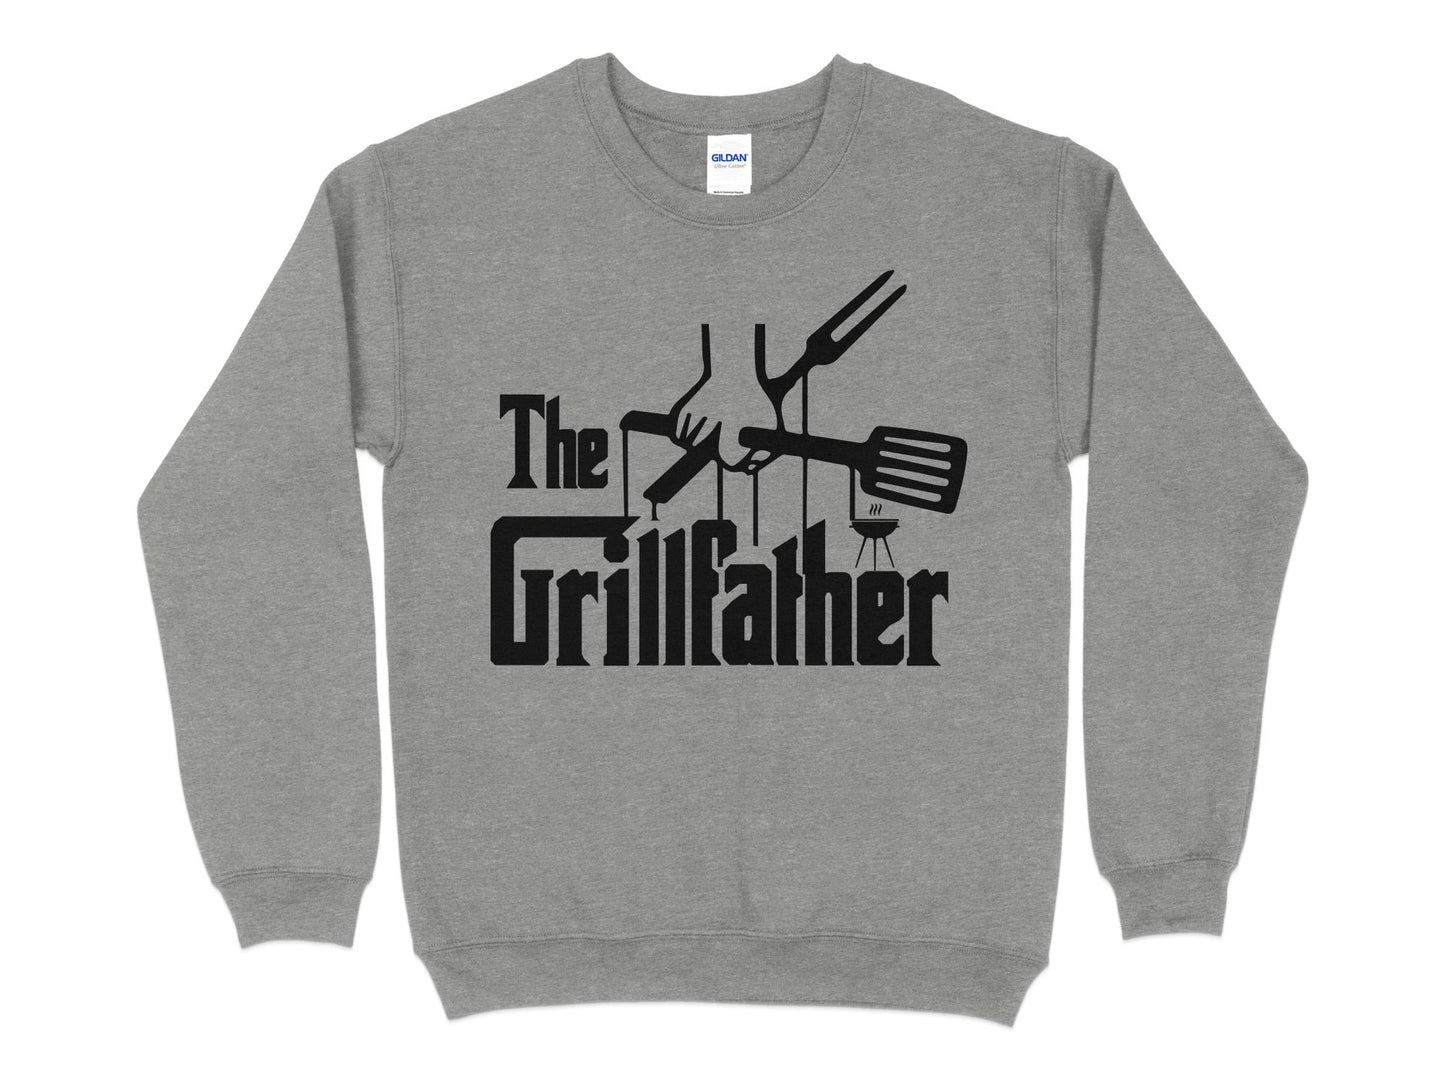 Grillfather Sweatshirt, gray